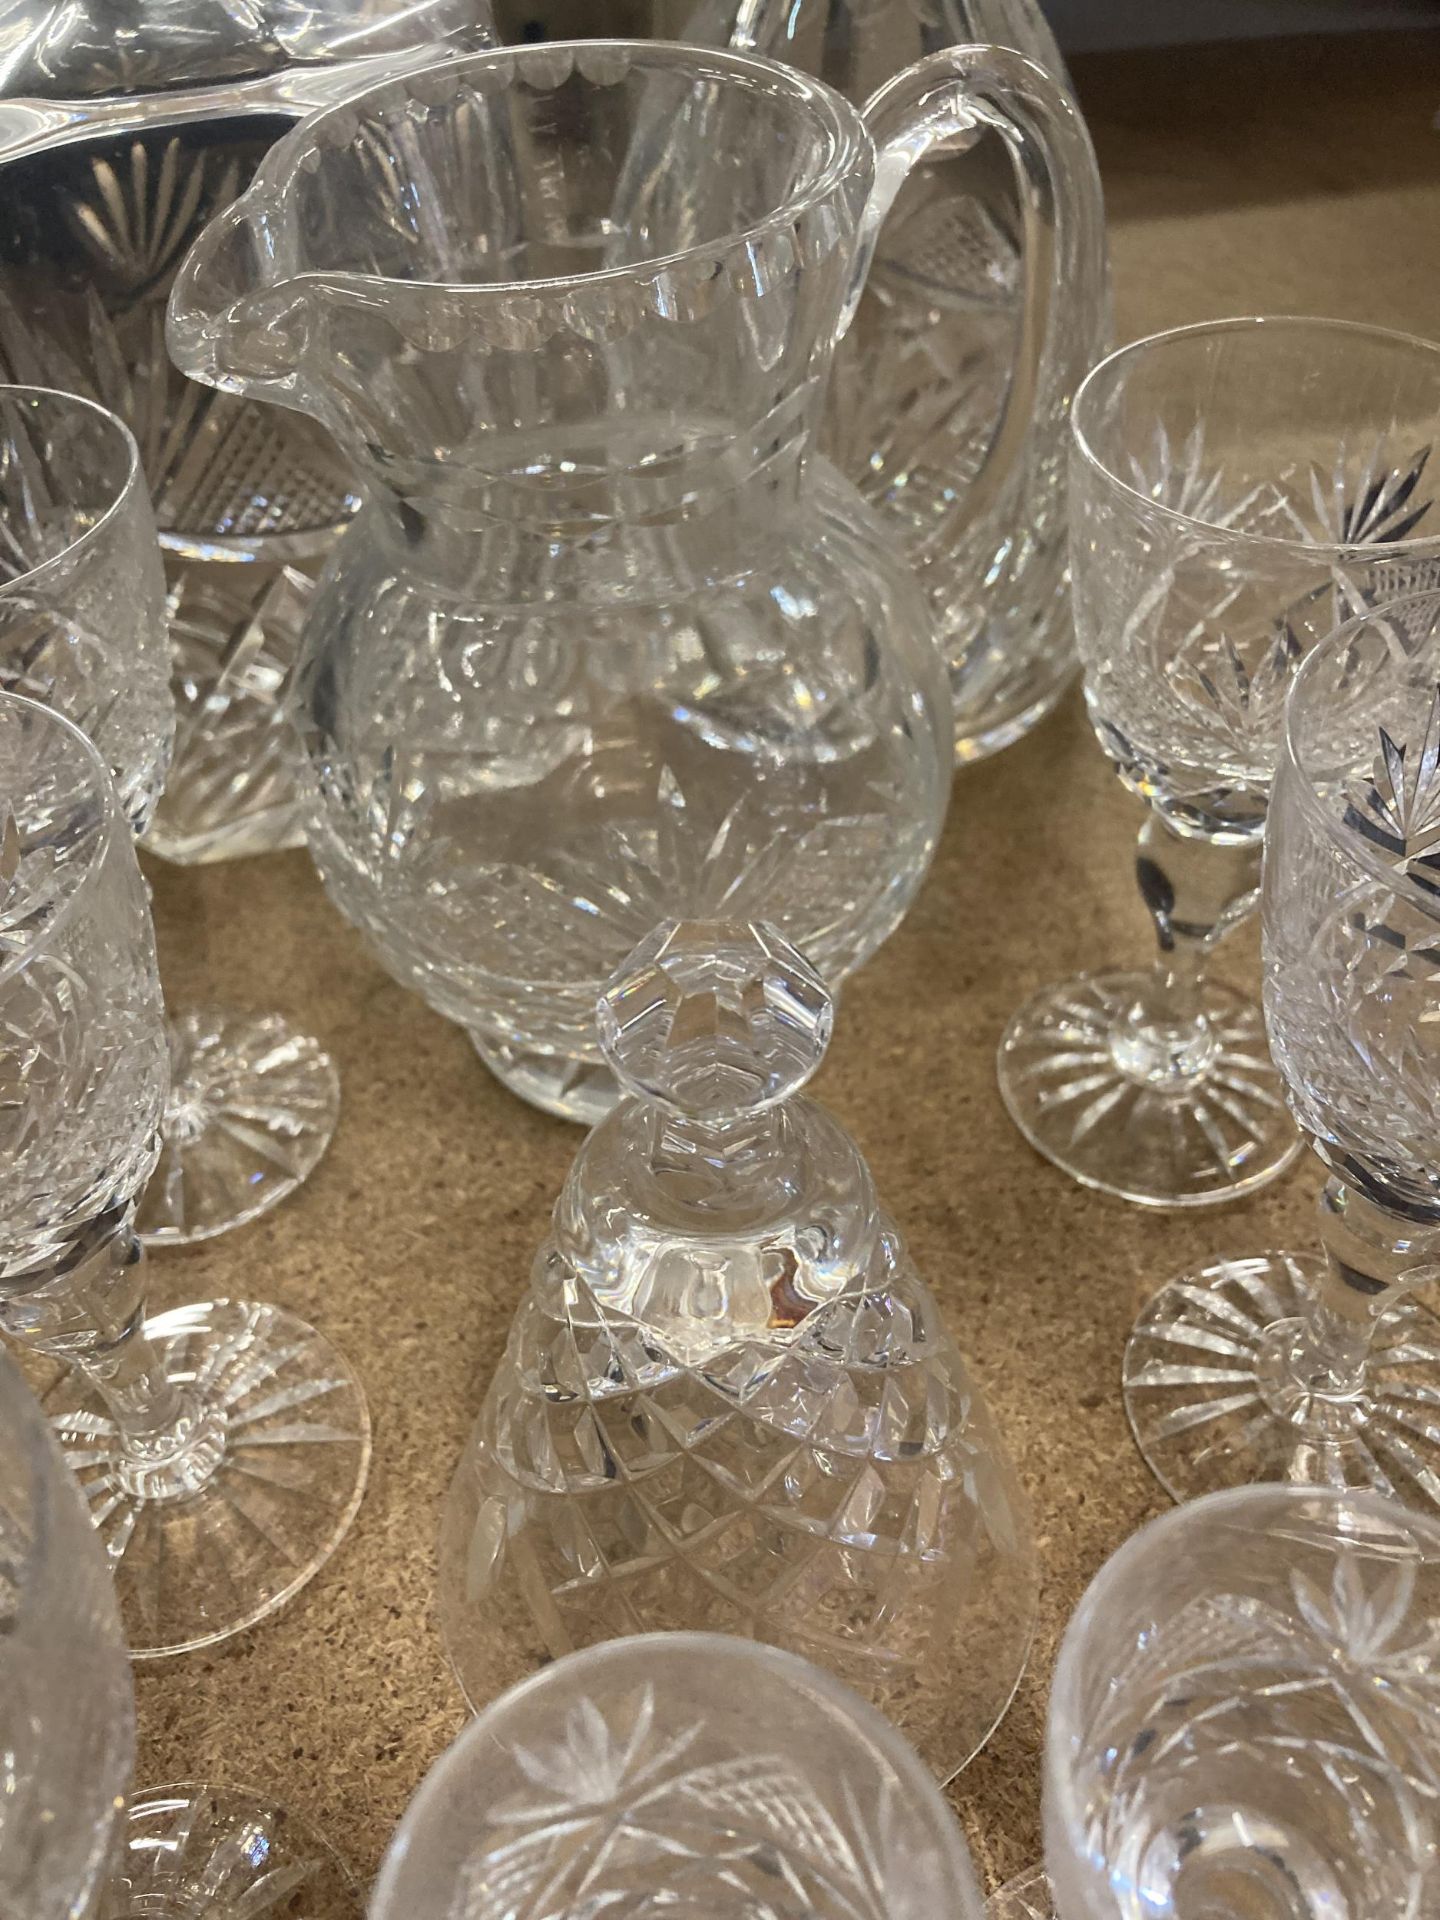 A QUANTITY OF GLASSWARE TO INCLUDE DECANTERS, A JUG, SHERRY AND LICQUOR GLASSES, ETC - Bild 5 aus 5